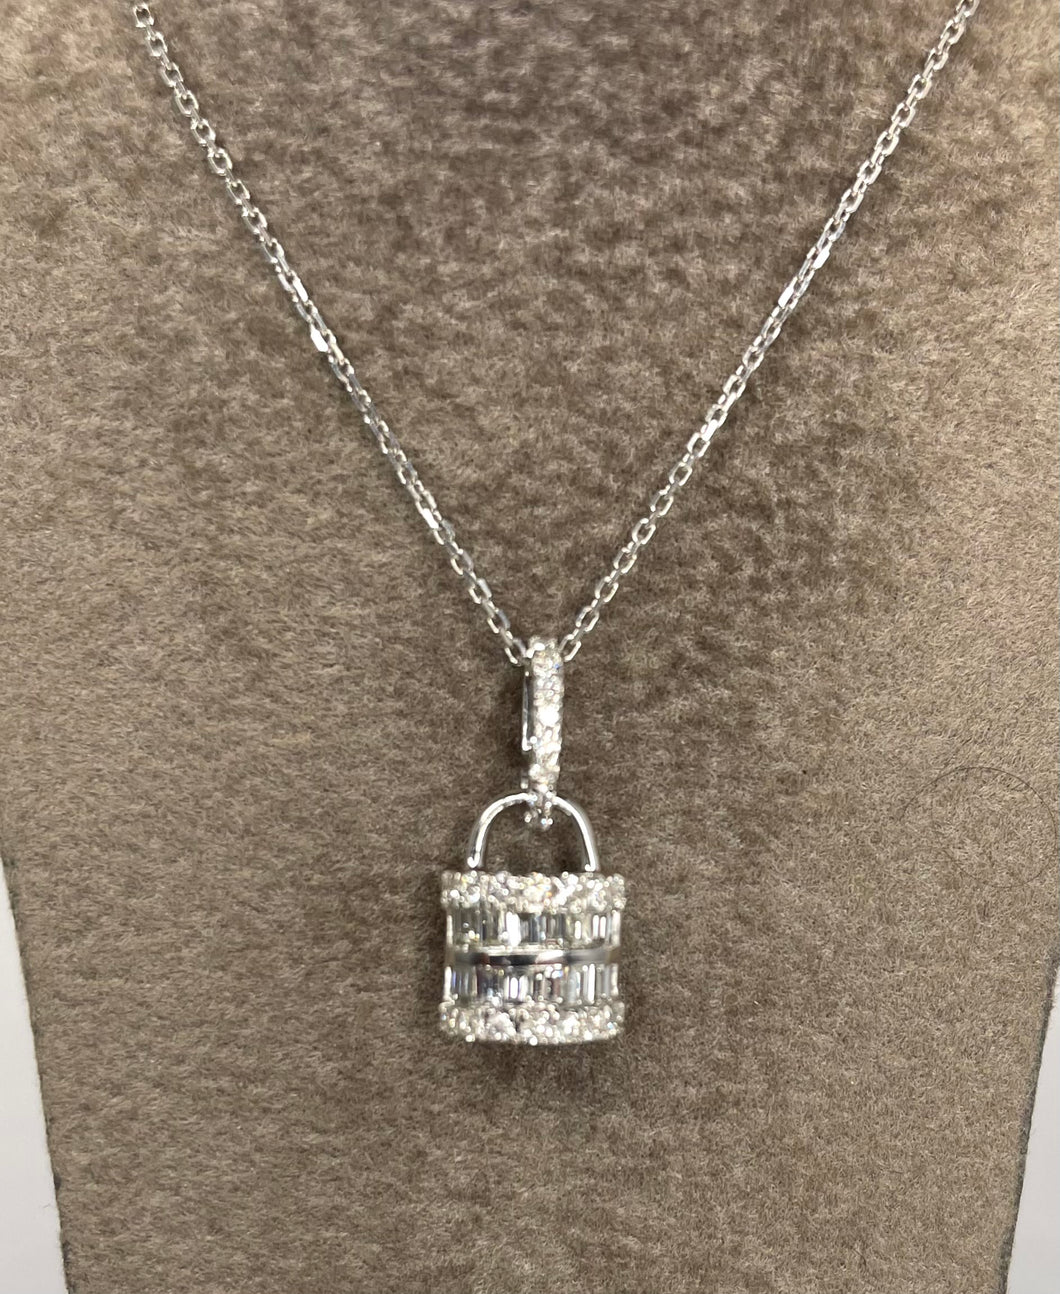 9ct White Gold Diamond Pendant